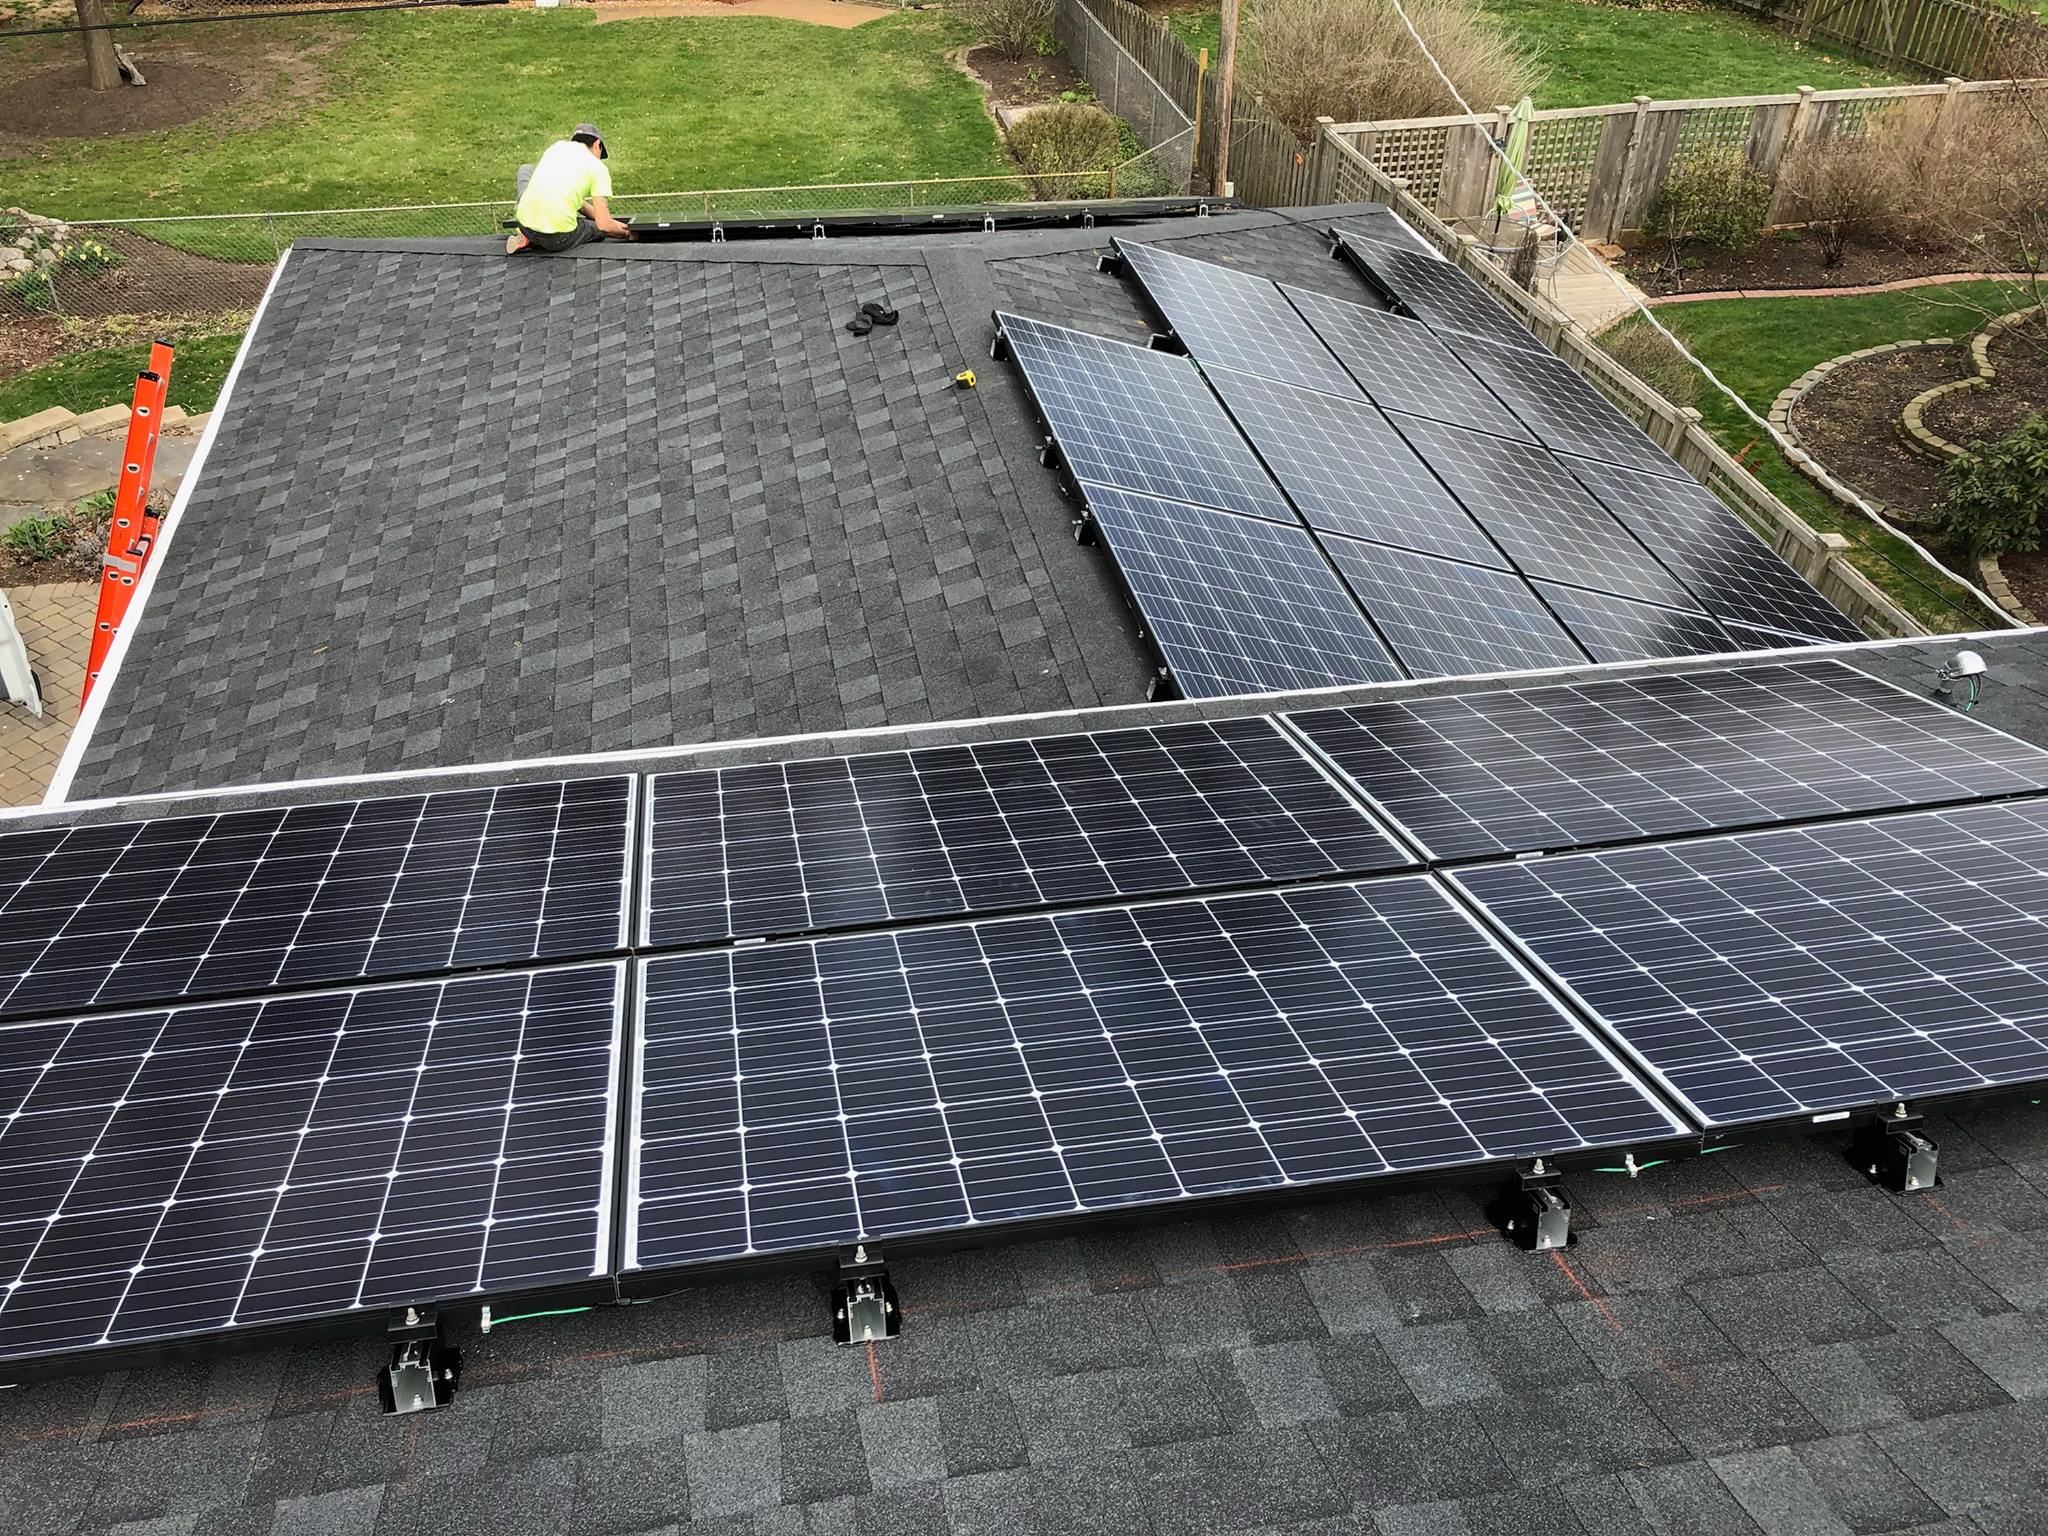 A Sun Badger Solar employee installs solar panels on a home.